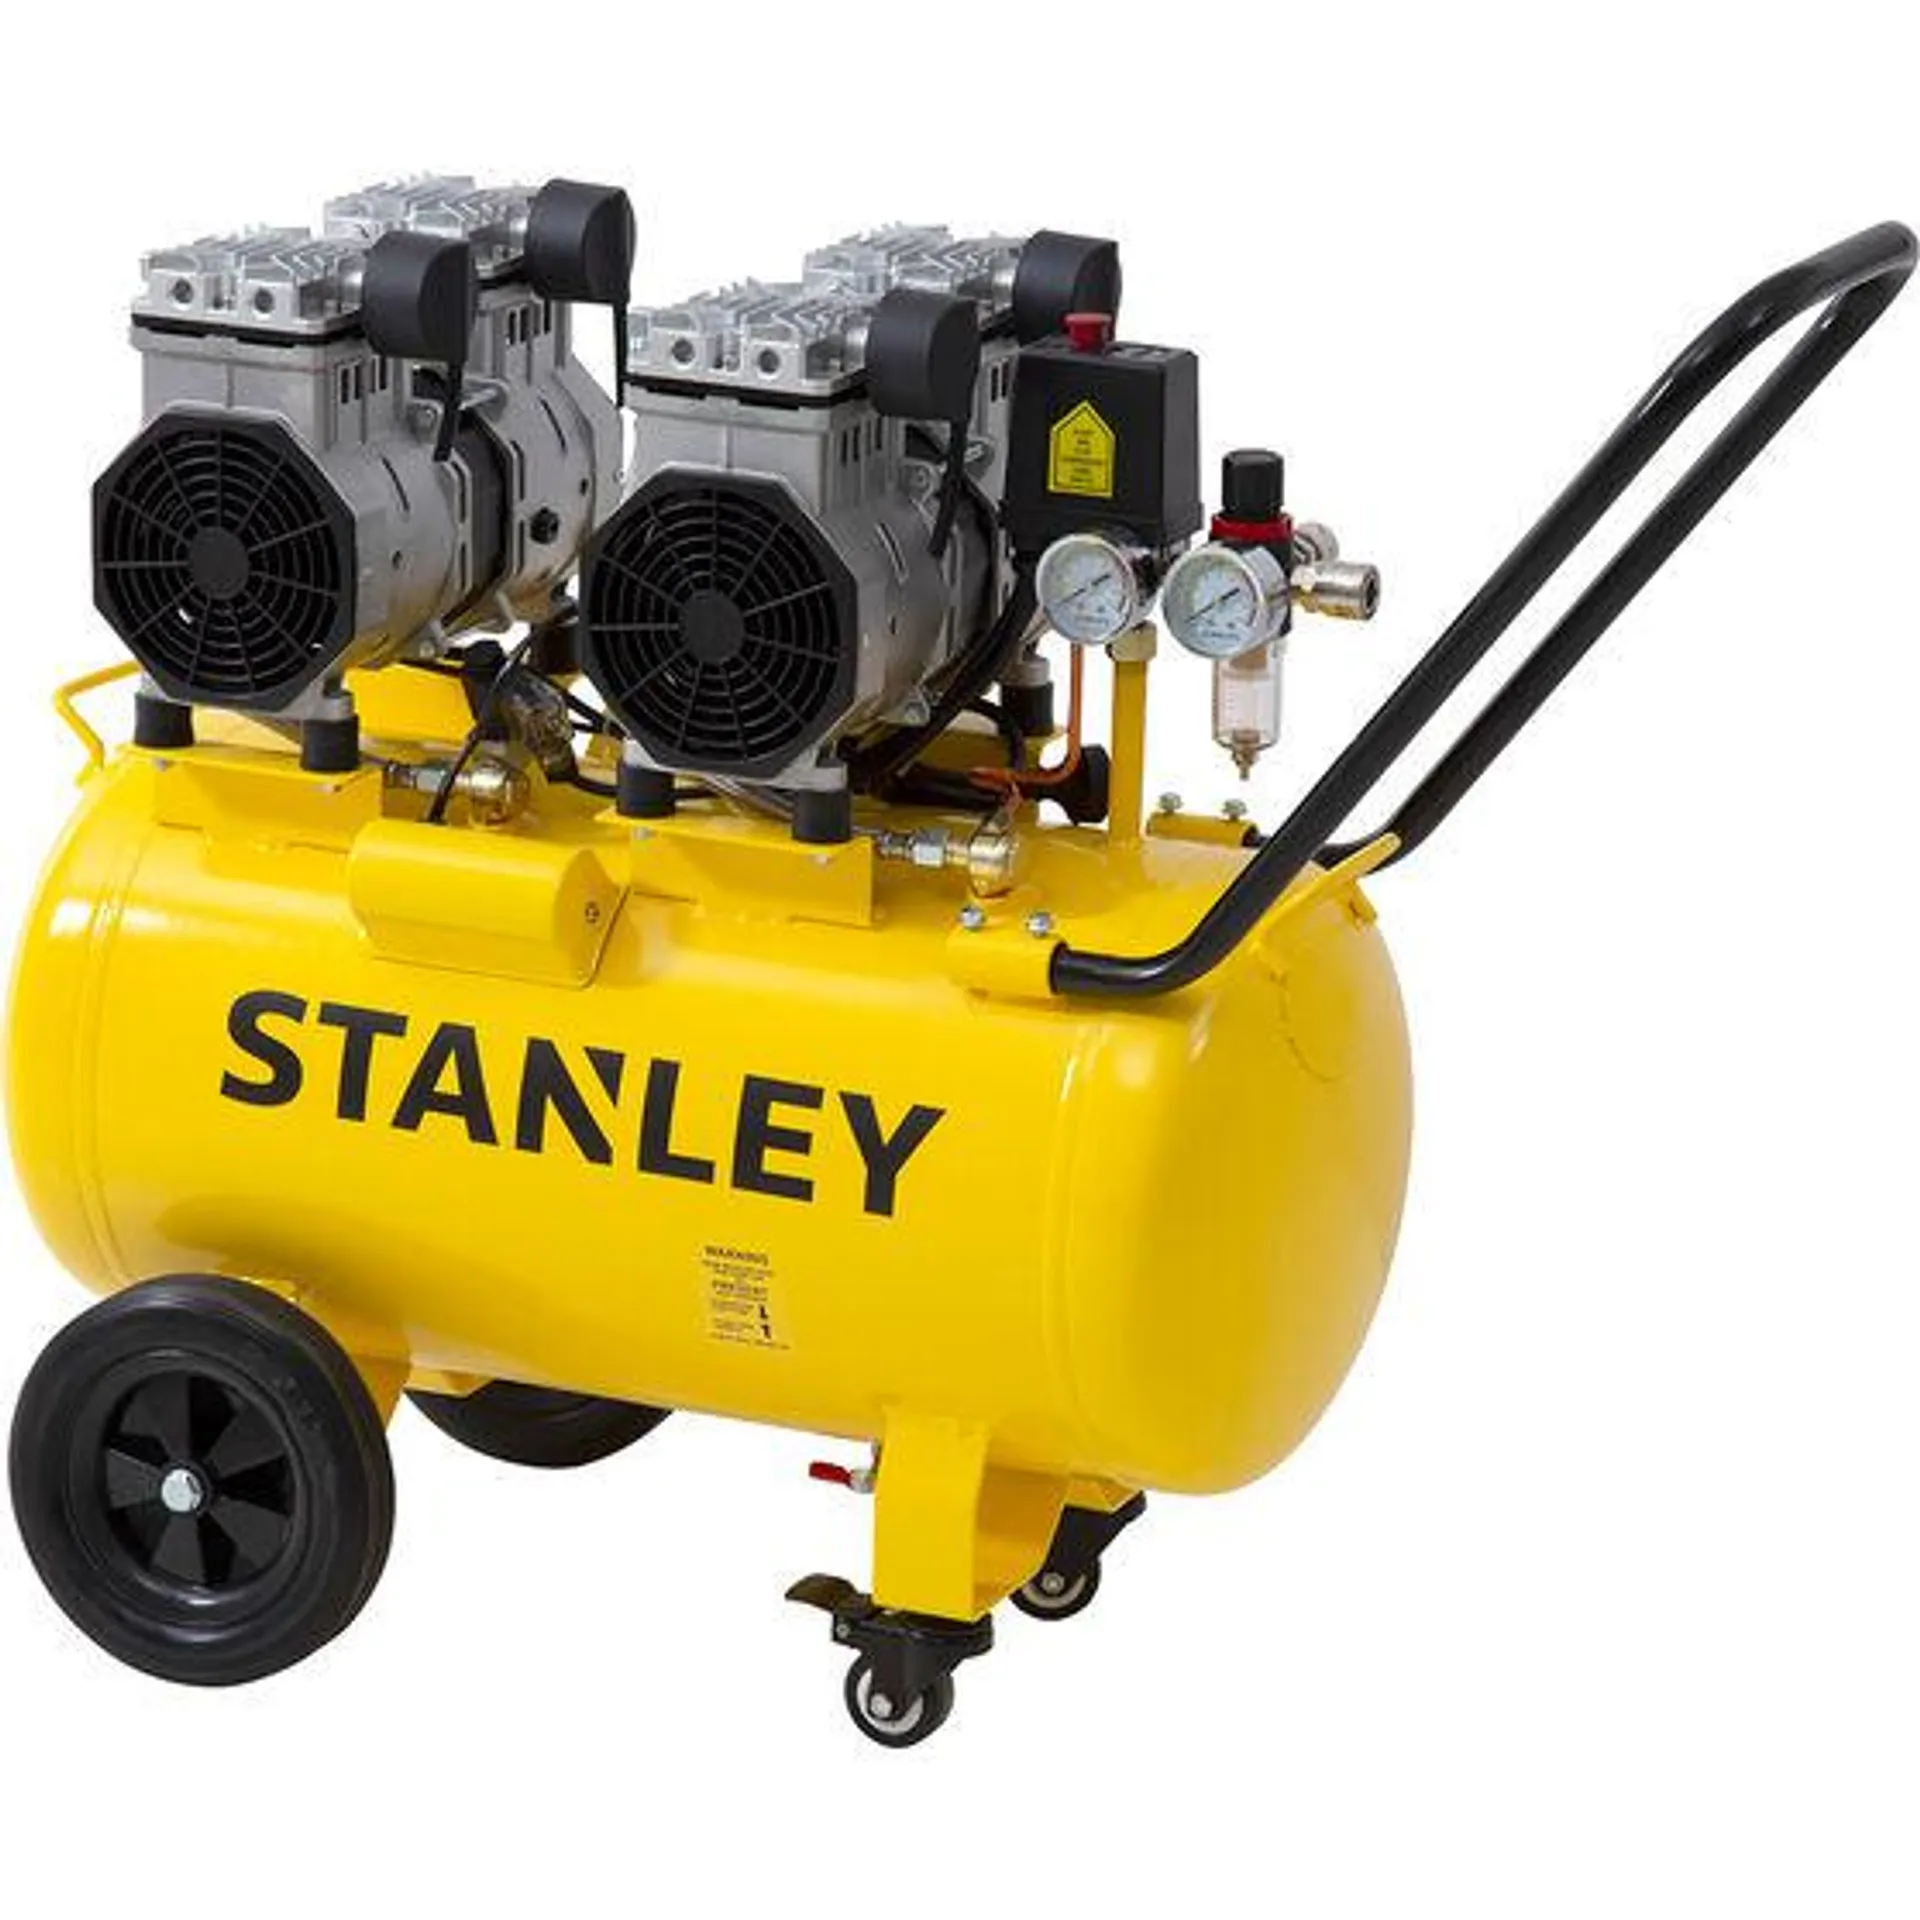 Stanley Air Compressor Silenced 2.75HP 50 Litre tank